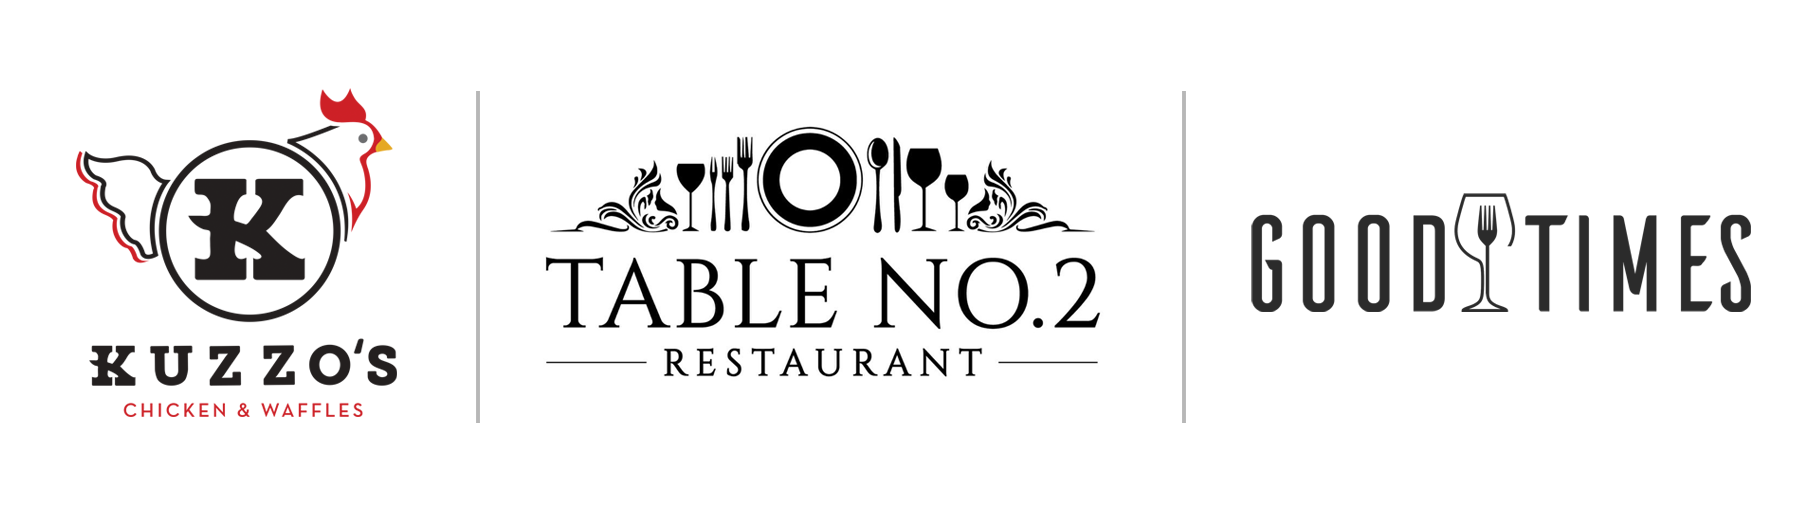 Kuzzo's Table No. 2 Good Times Restaurants Logo